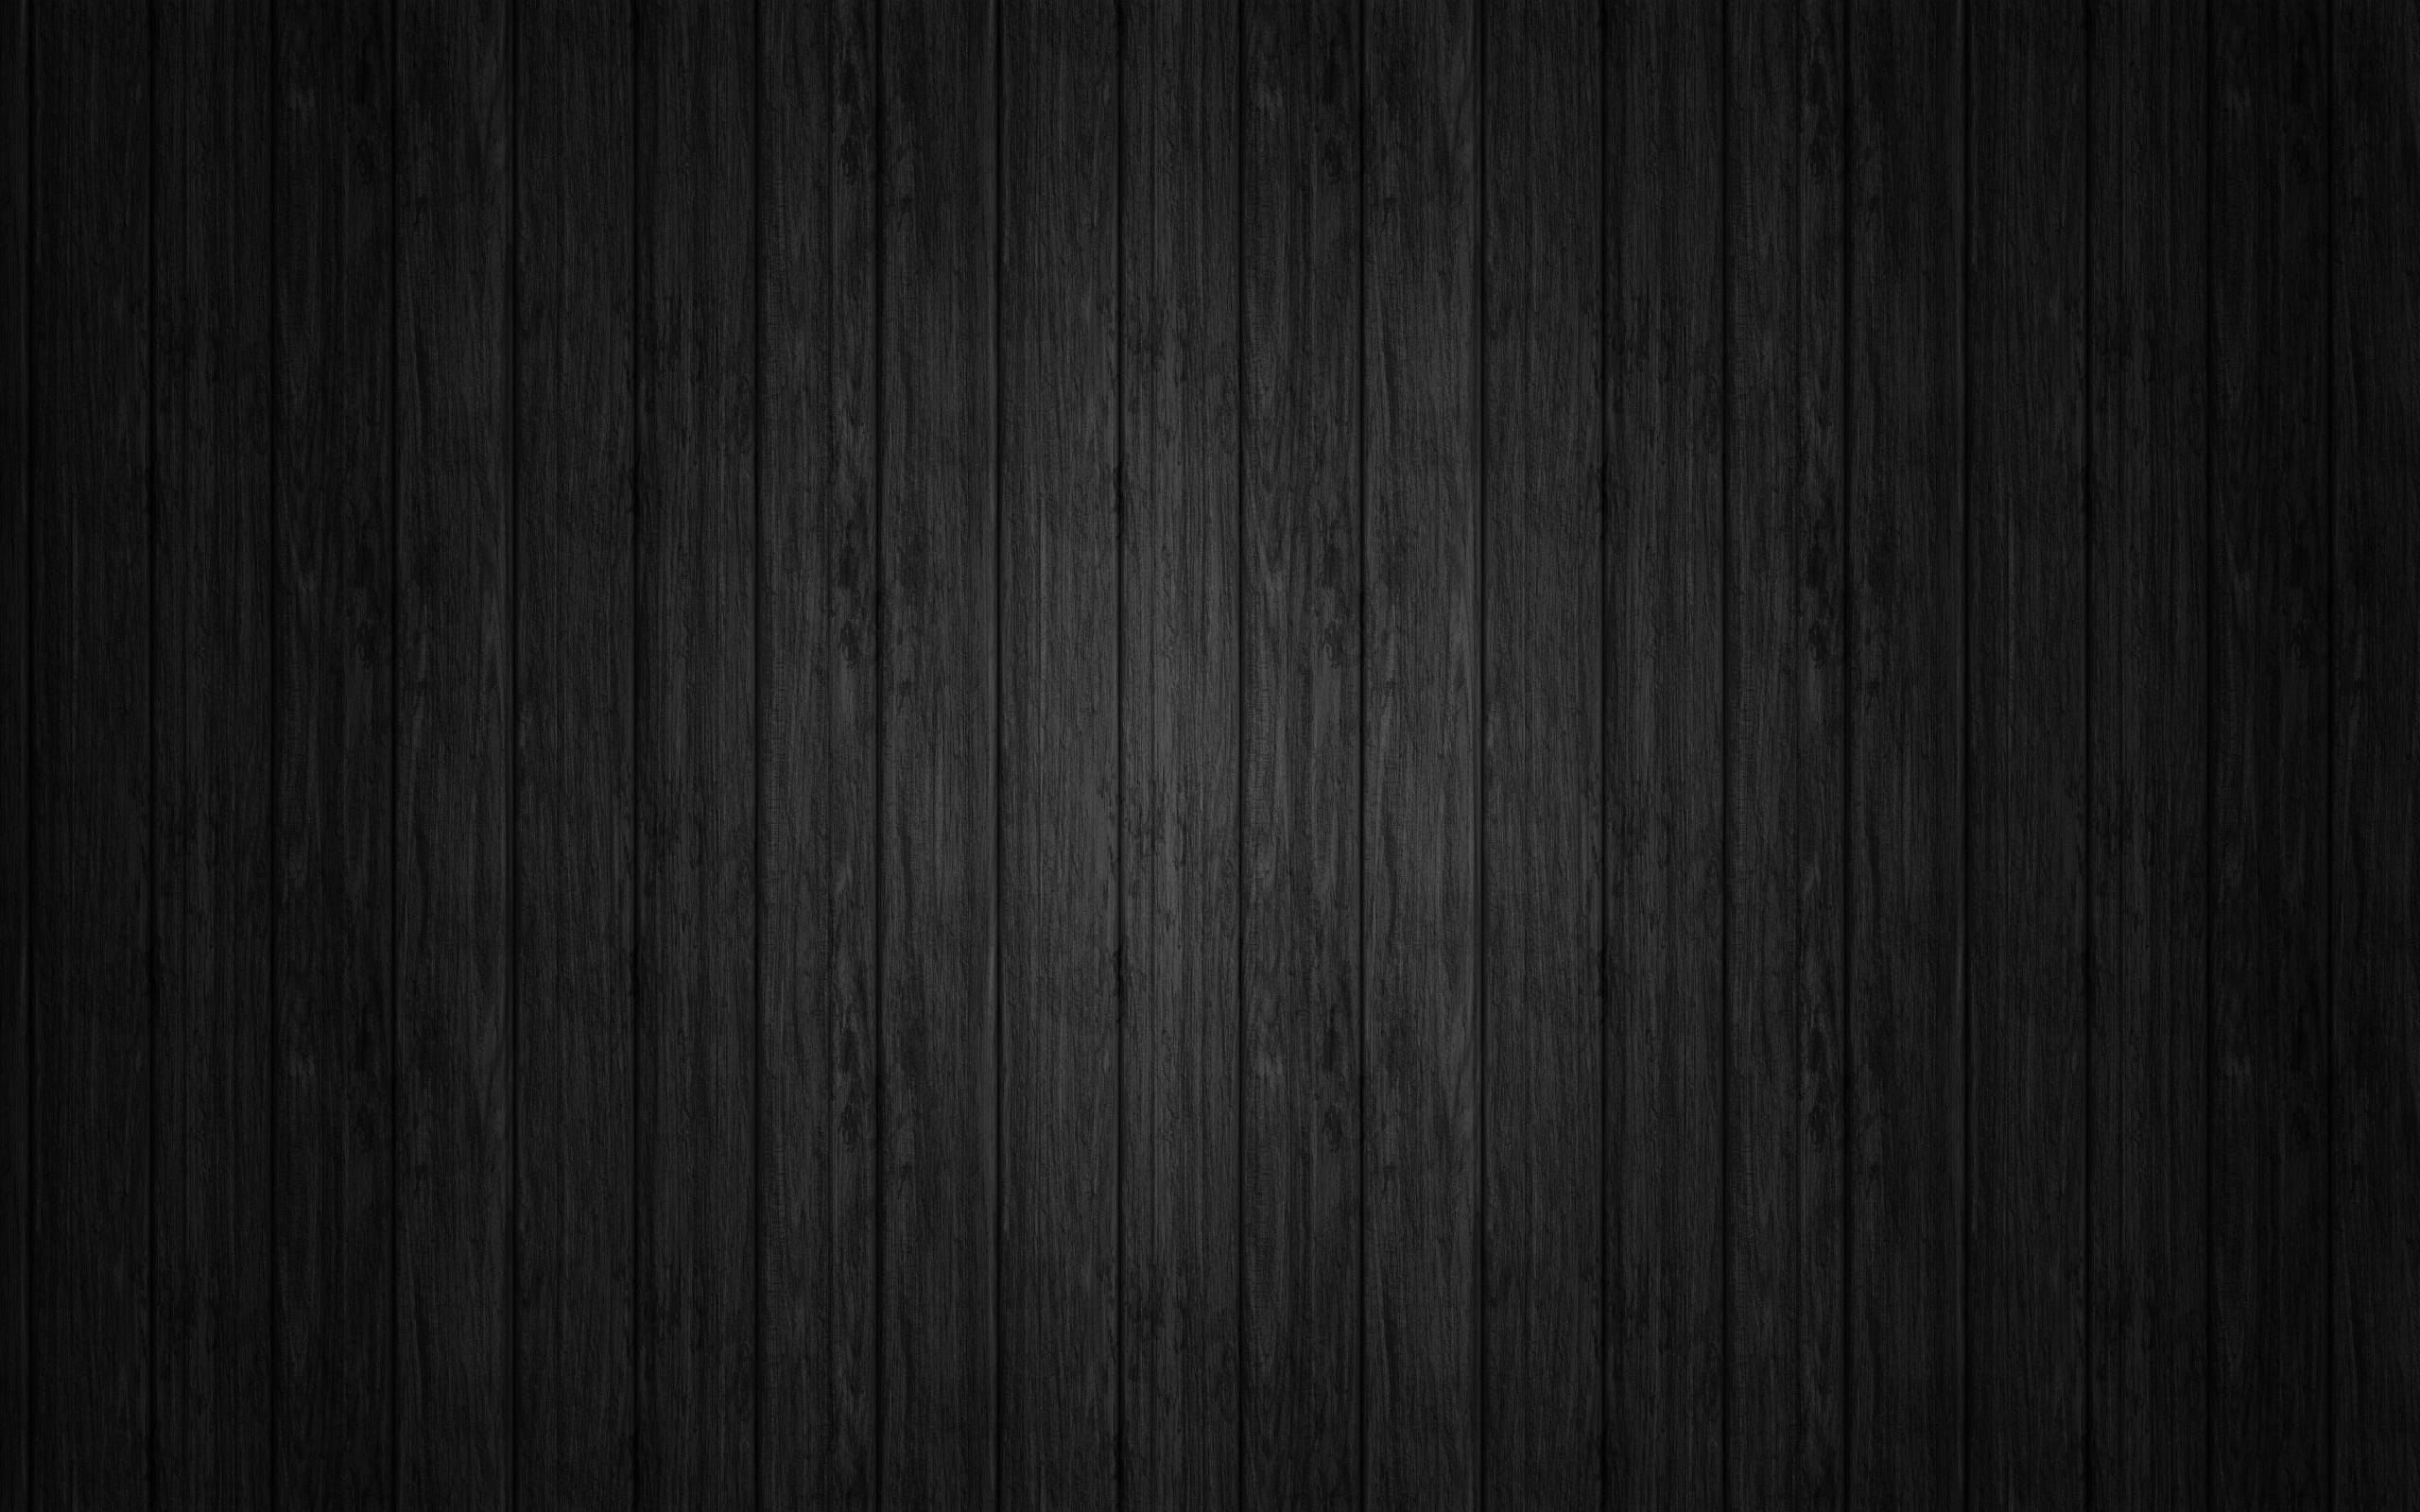 Board Black Series Texture Background Wood Wallpaper Wood Texture